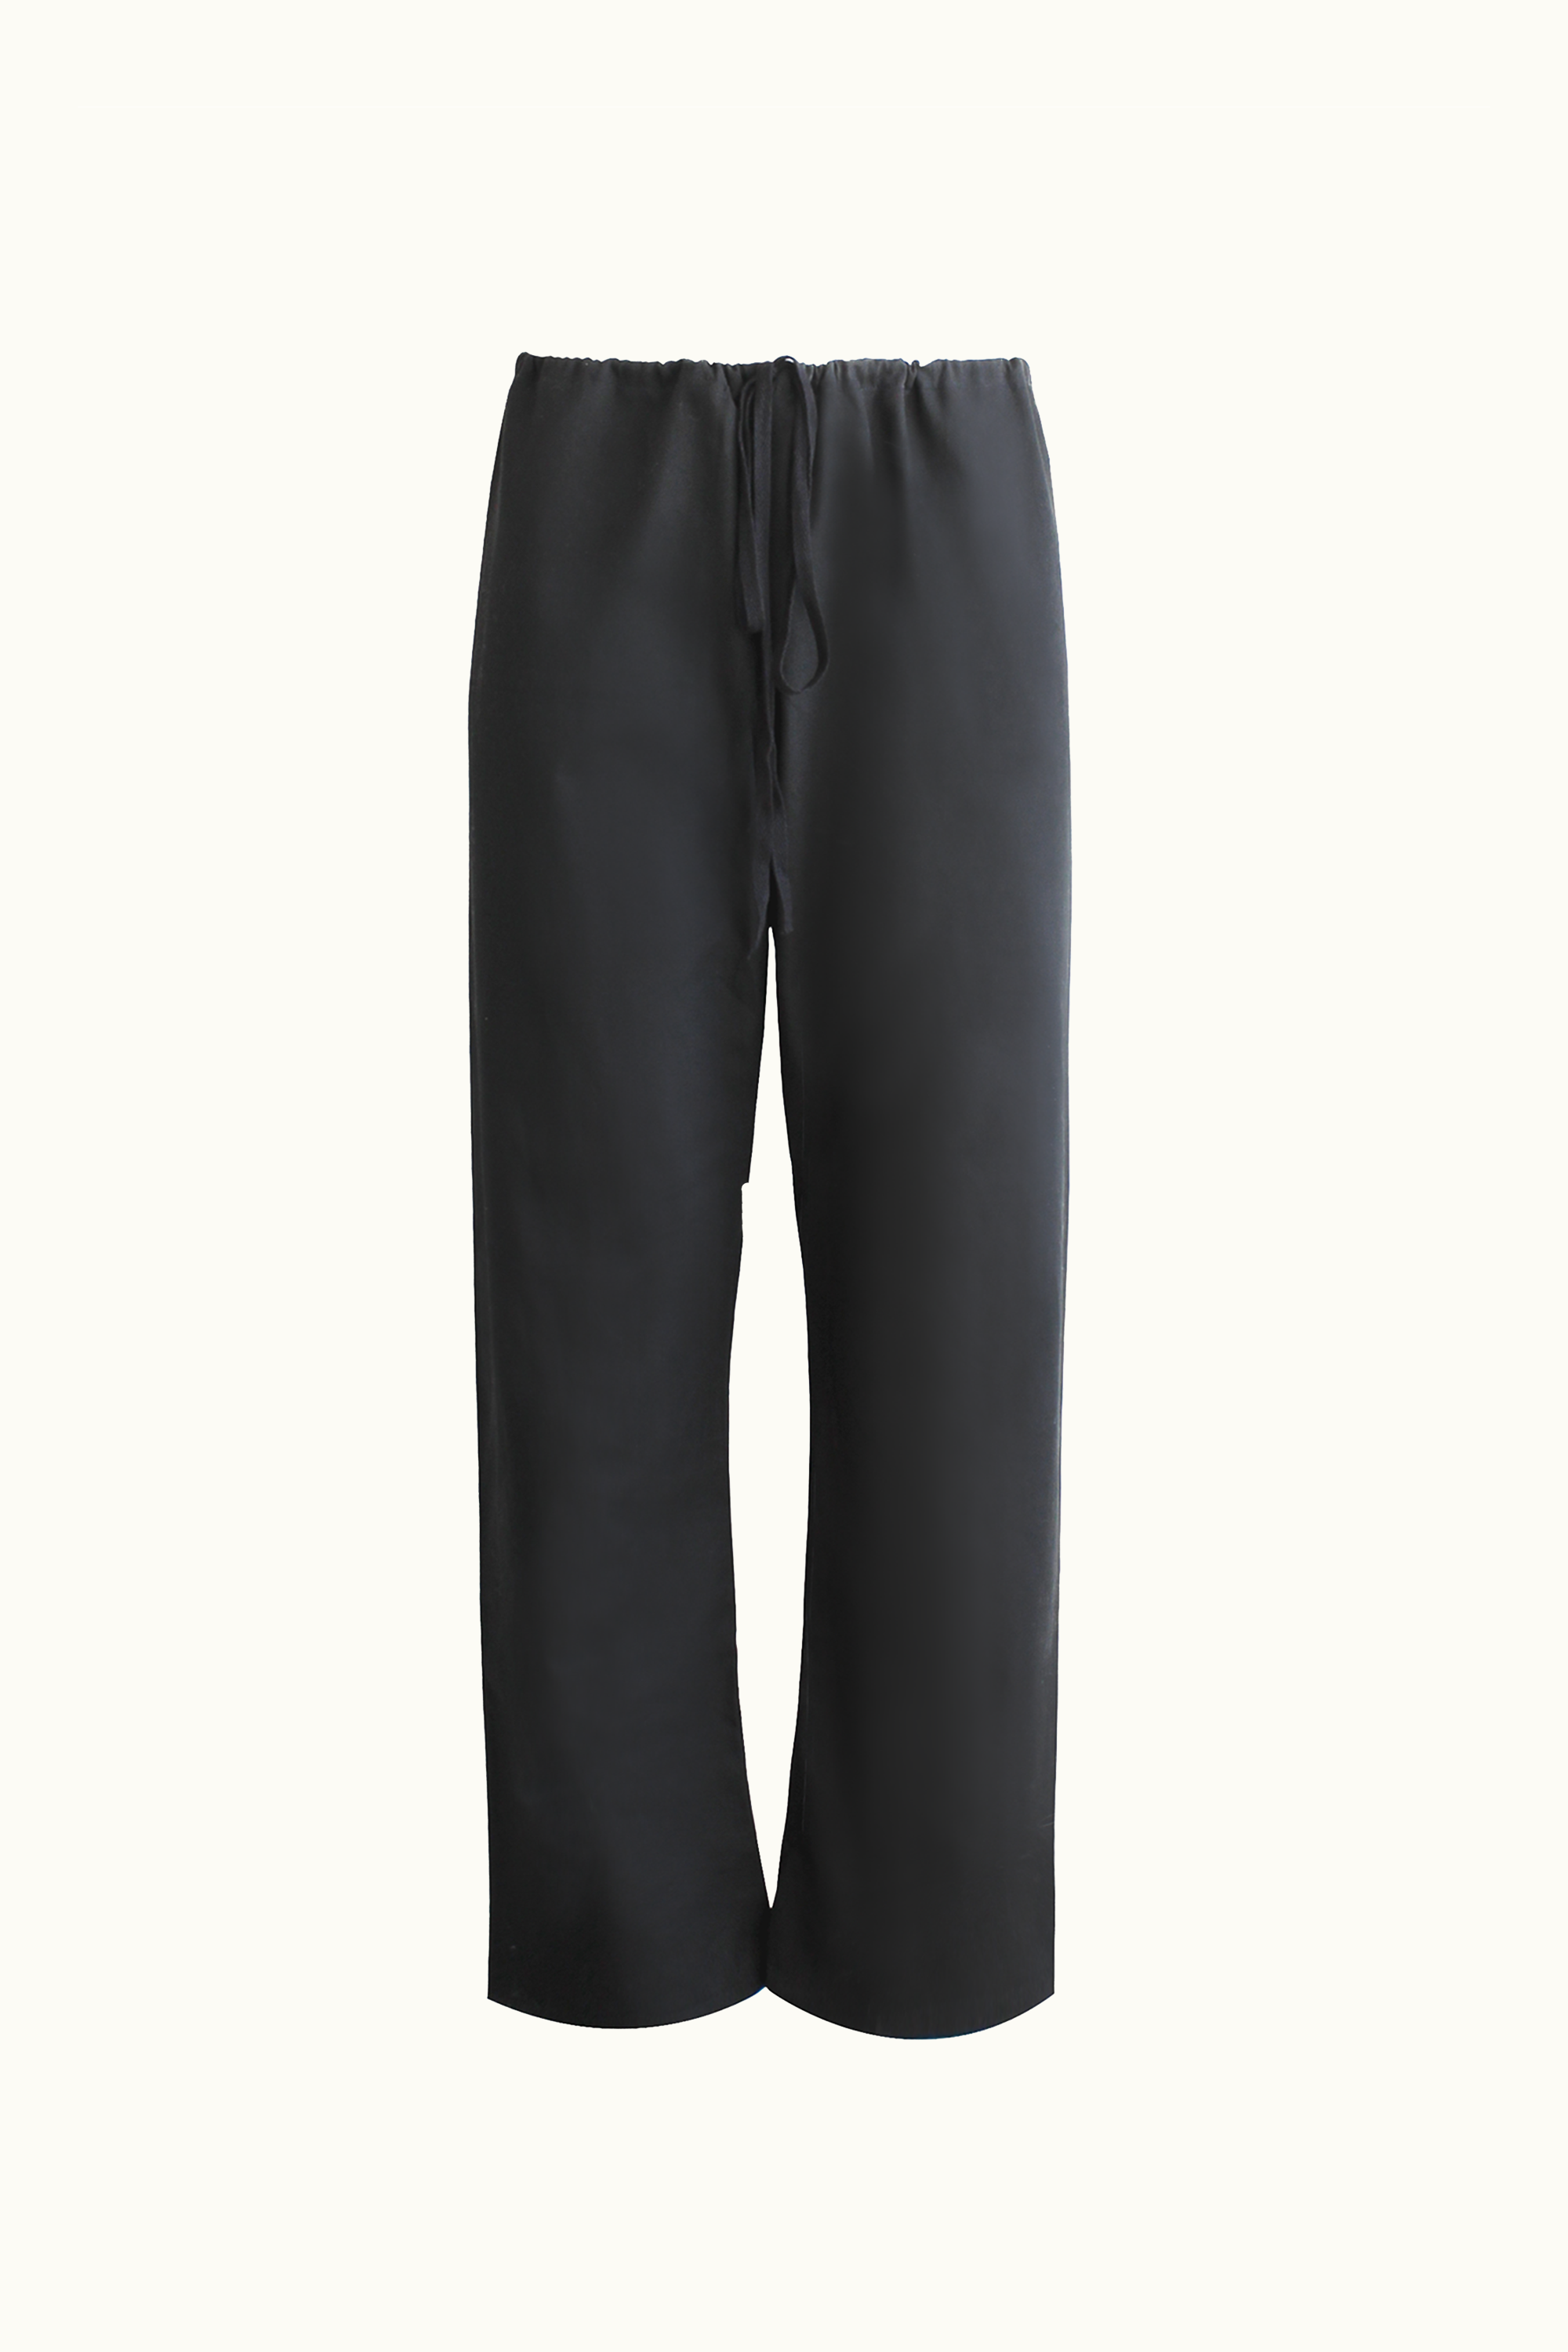 Noah Elastic Waist Cotton Tencel Pants | Battenwear Active Lazy Pants sulle  Twill | RvceShops